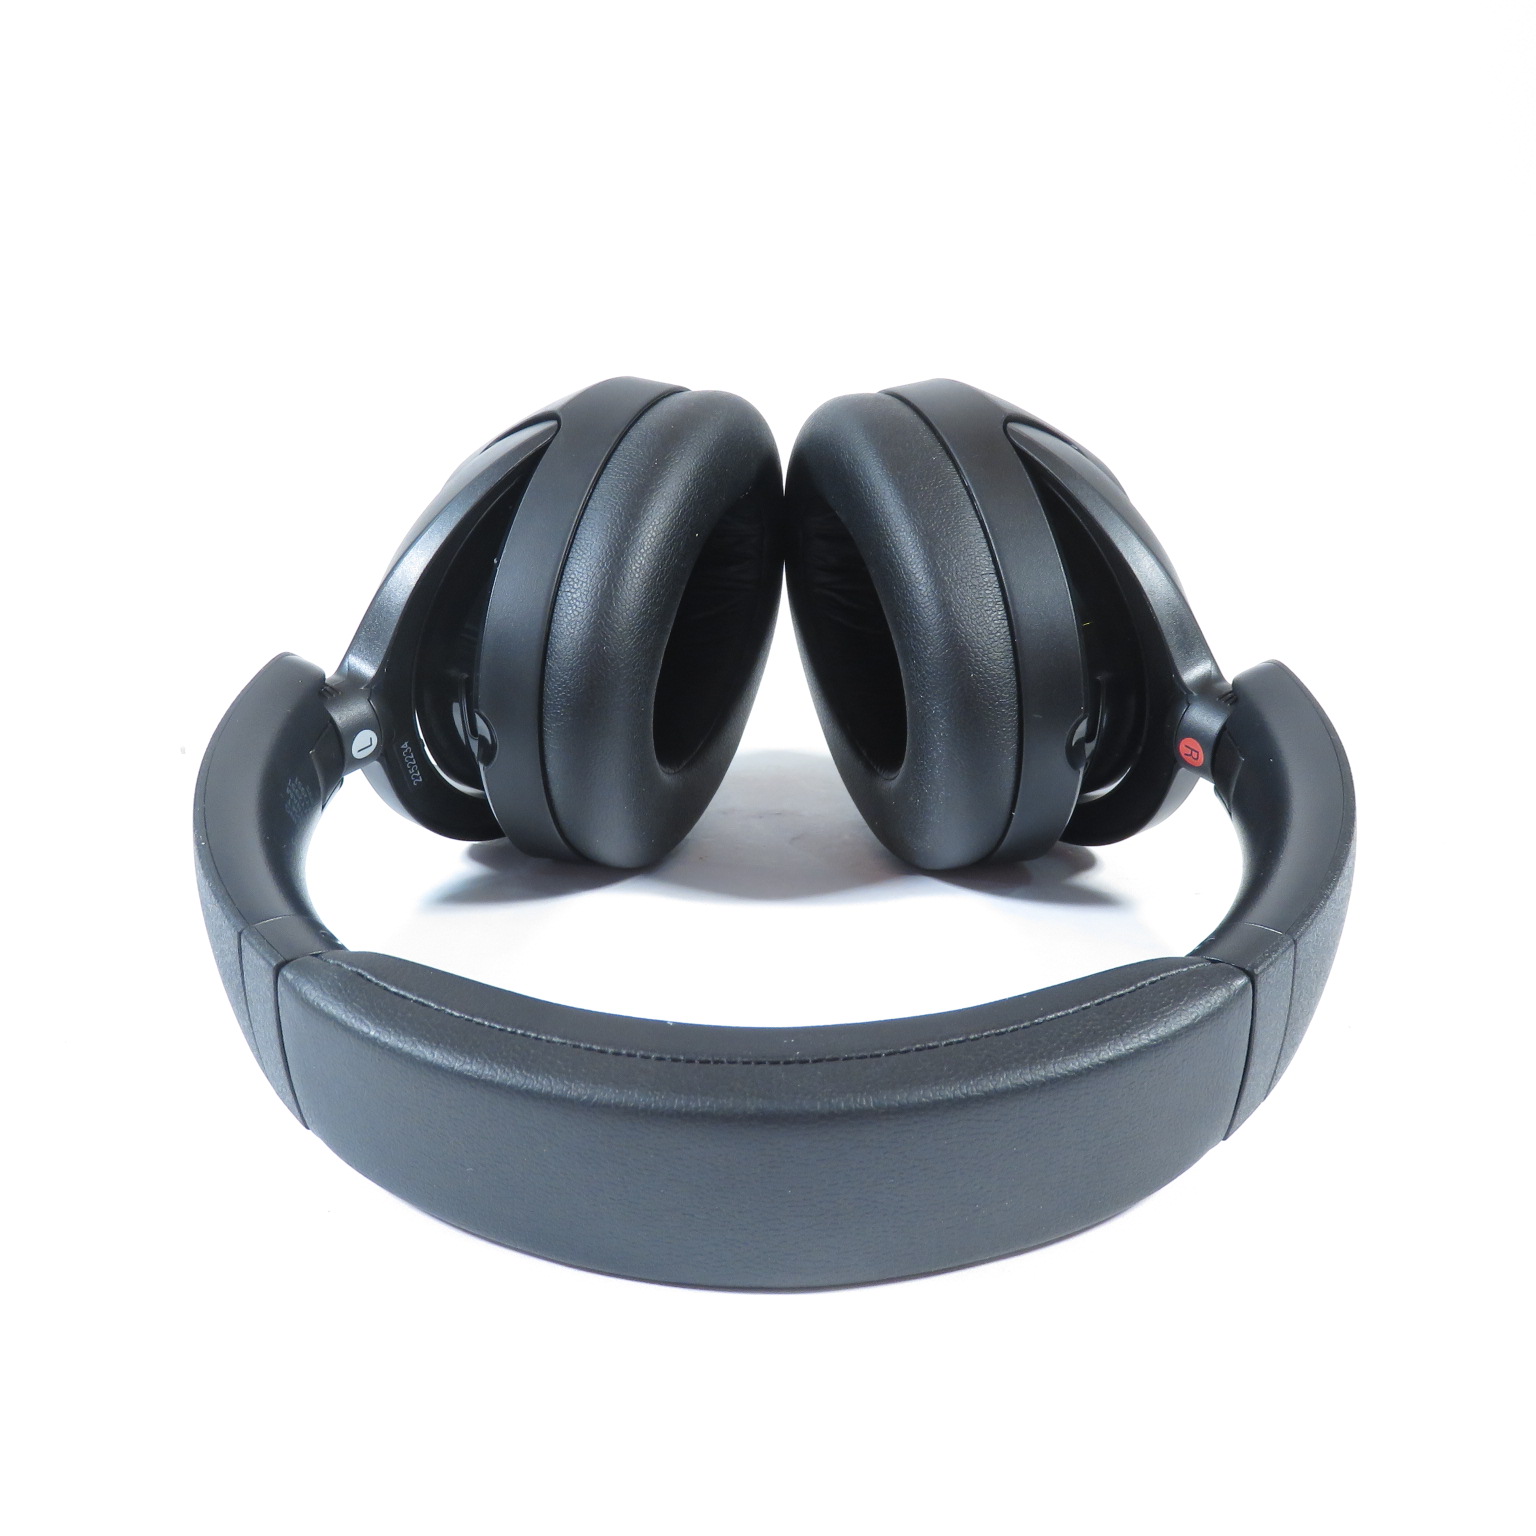 Sony WH-XB910N Over-Ear Wireless Headphones